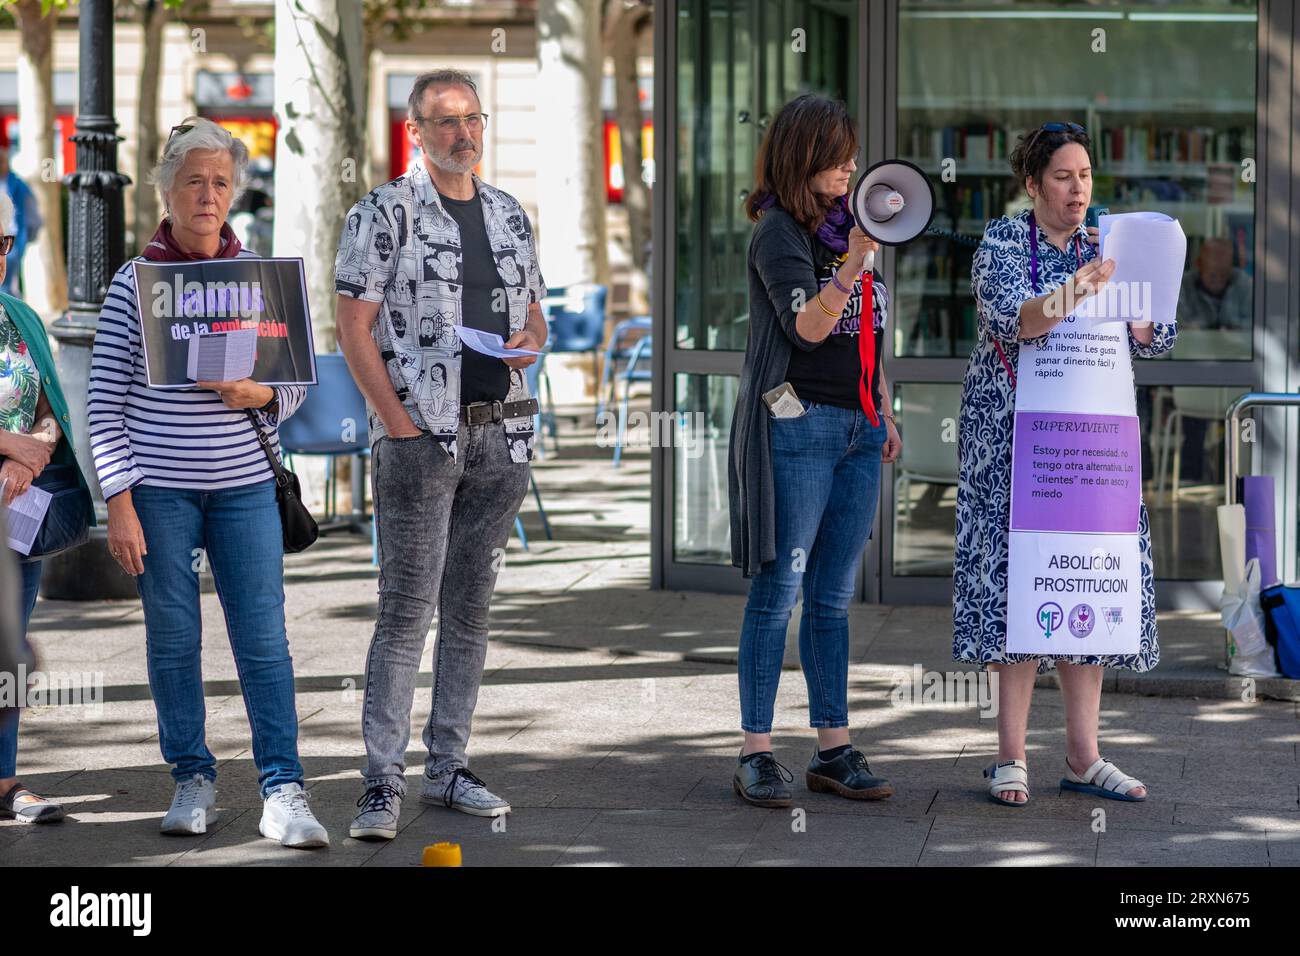 Logroño, La Rioja, Spain - September 23, 2023. Abolitionist feminist women's associations demonstrate against the legalization of prostitution in Logr Stock Photo